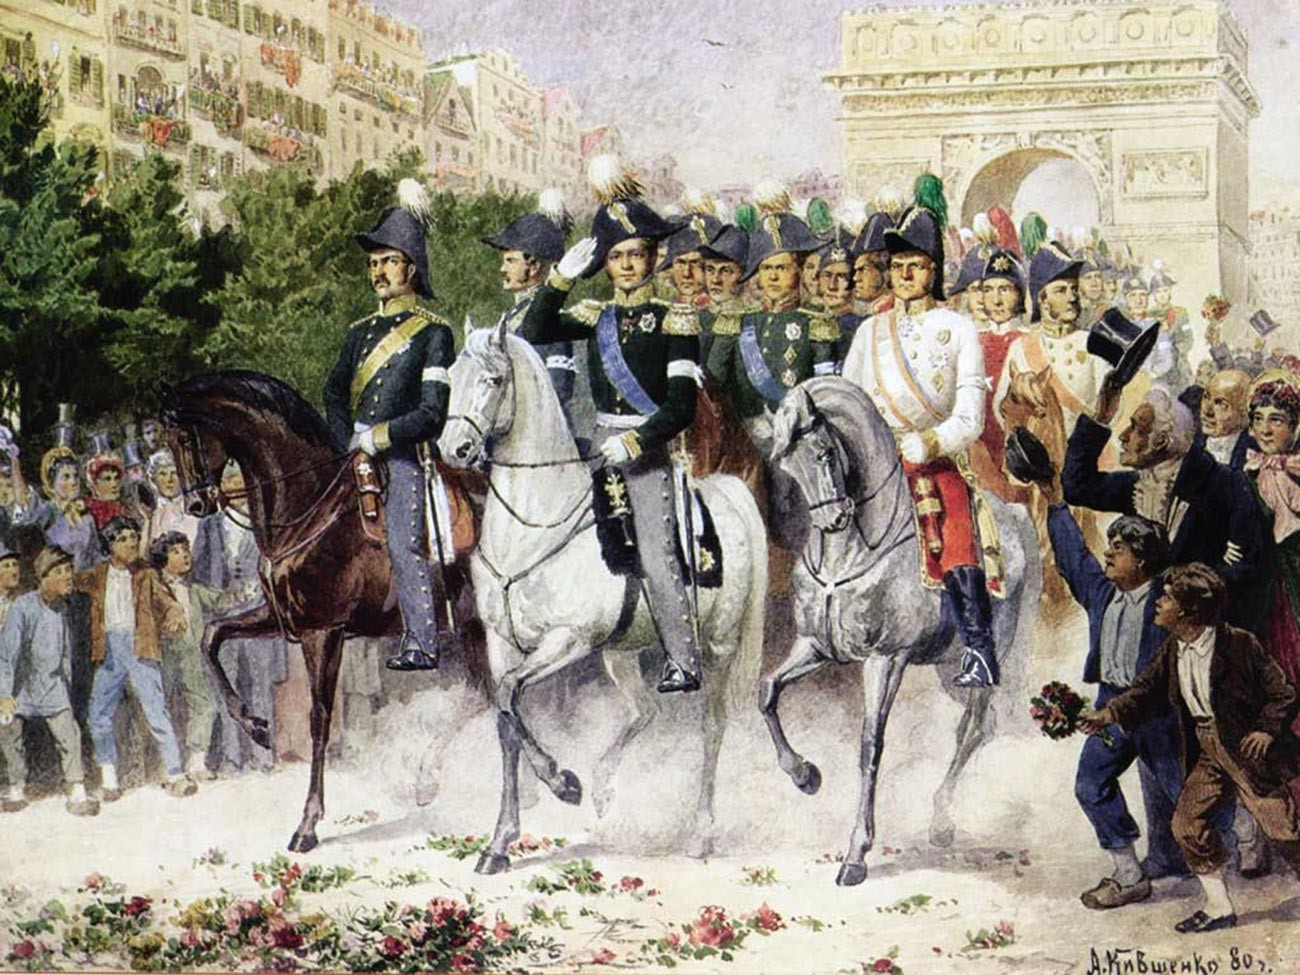 Russian army entering Paris in 1814